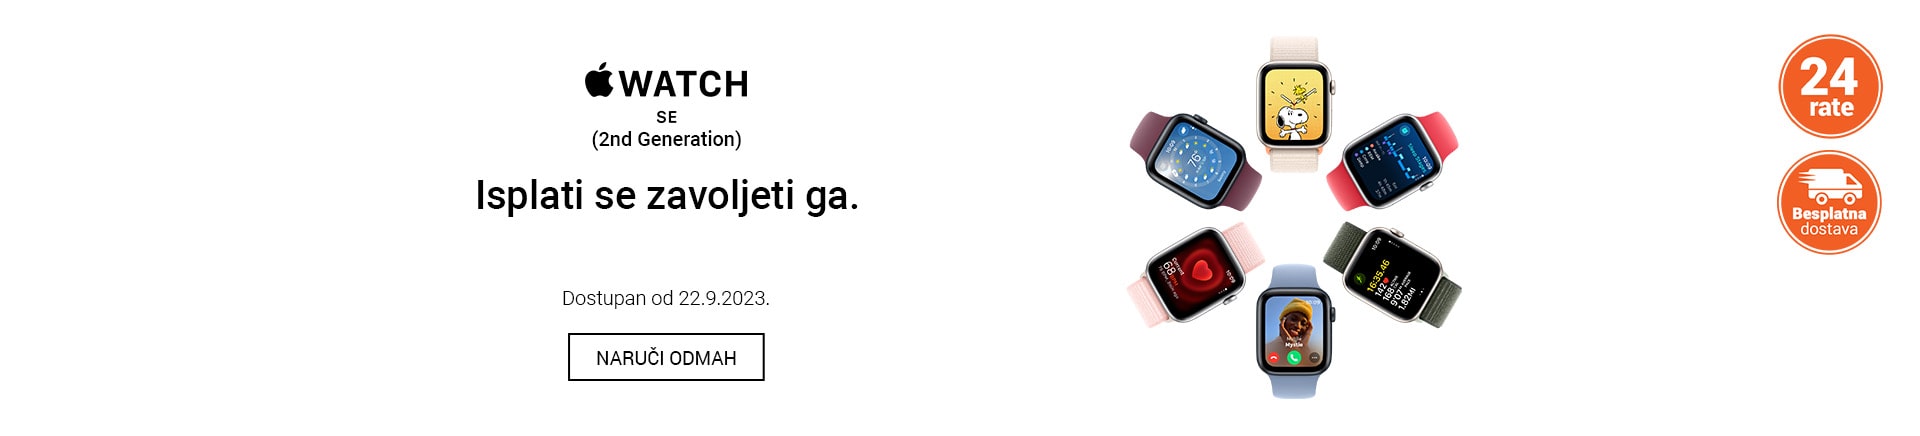 BA~Apple Watch SE2 NAJAVA MOBILE 380 X 436-min.jpg